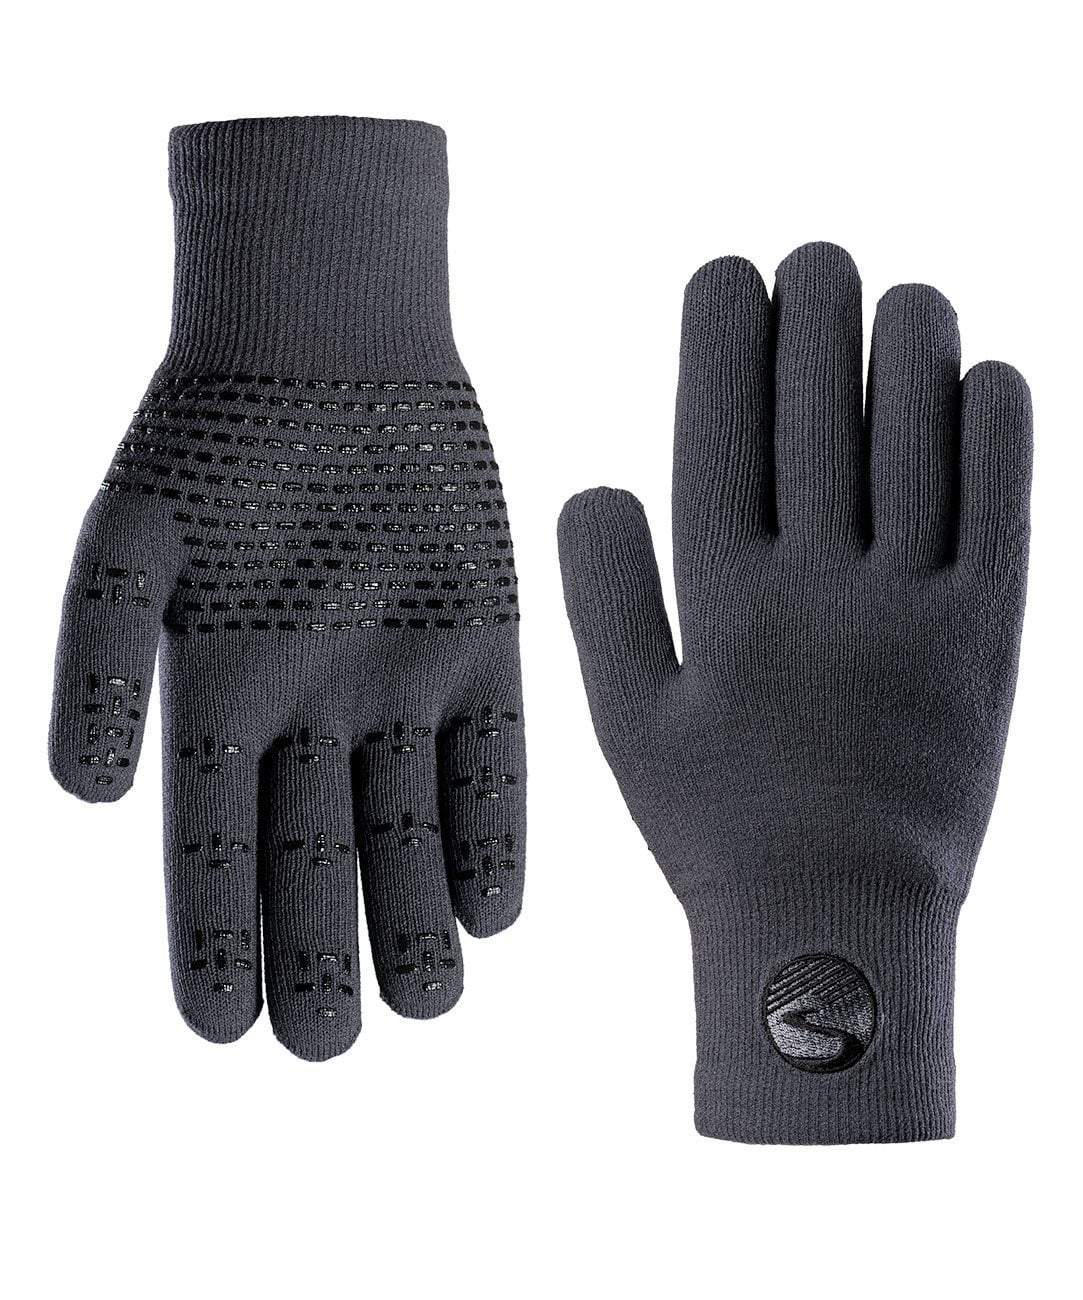 Showers Pass Crosspoint Waterproof Knit Wool Gloves